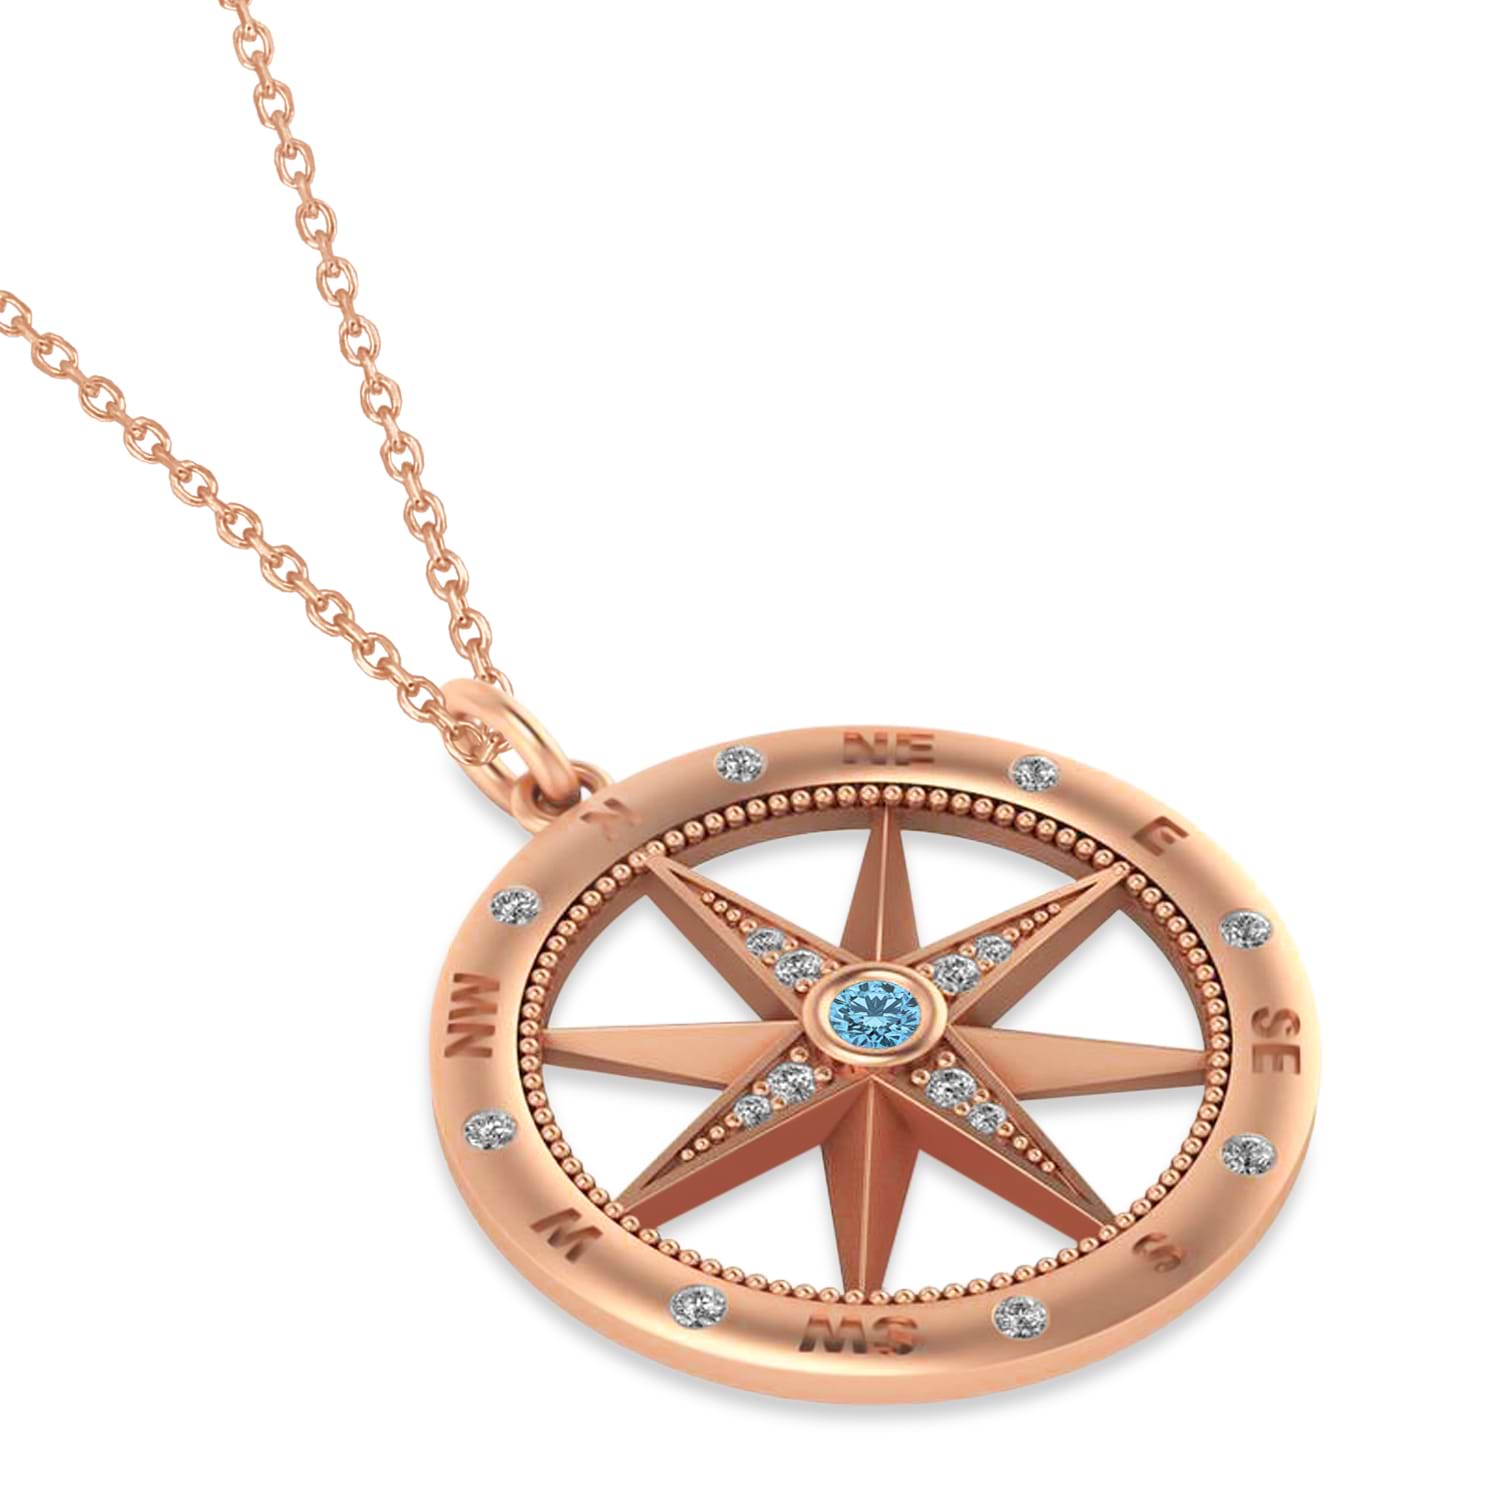 Large Compass Pendant For Men Blue Topaz & Diamond Accented 14k Rose Gold (0.38ct)